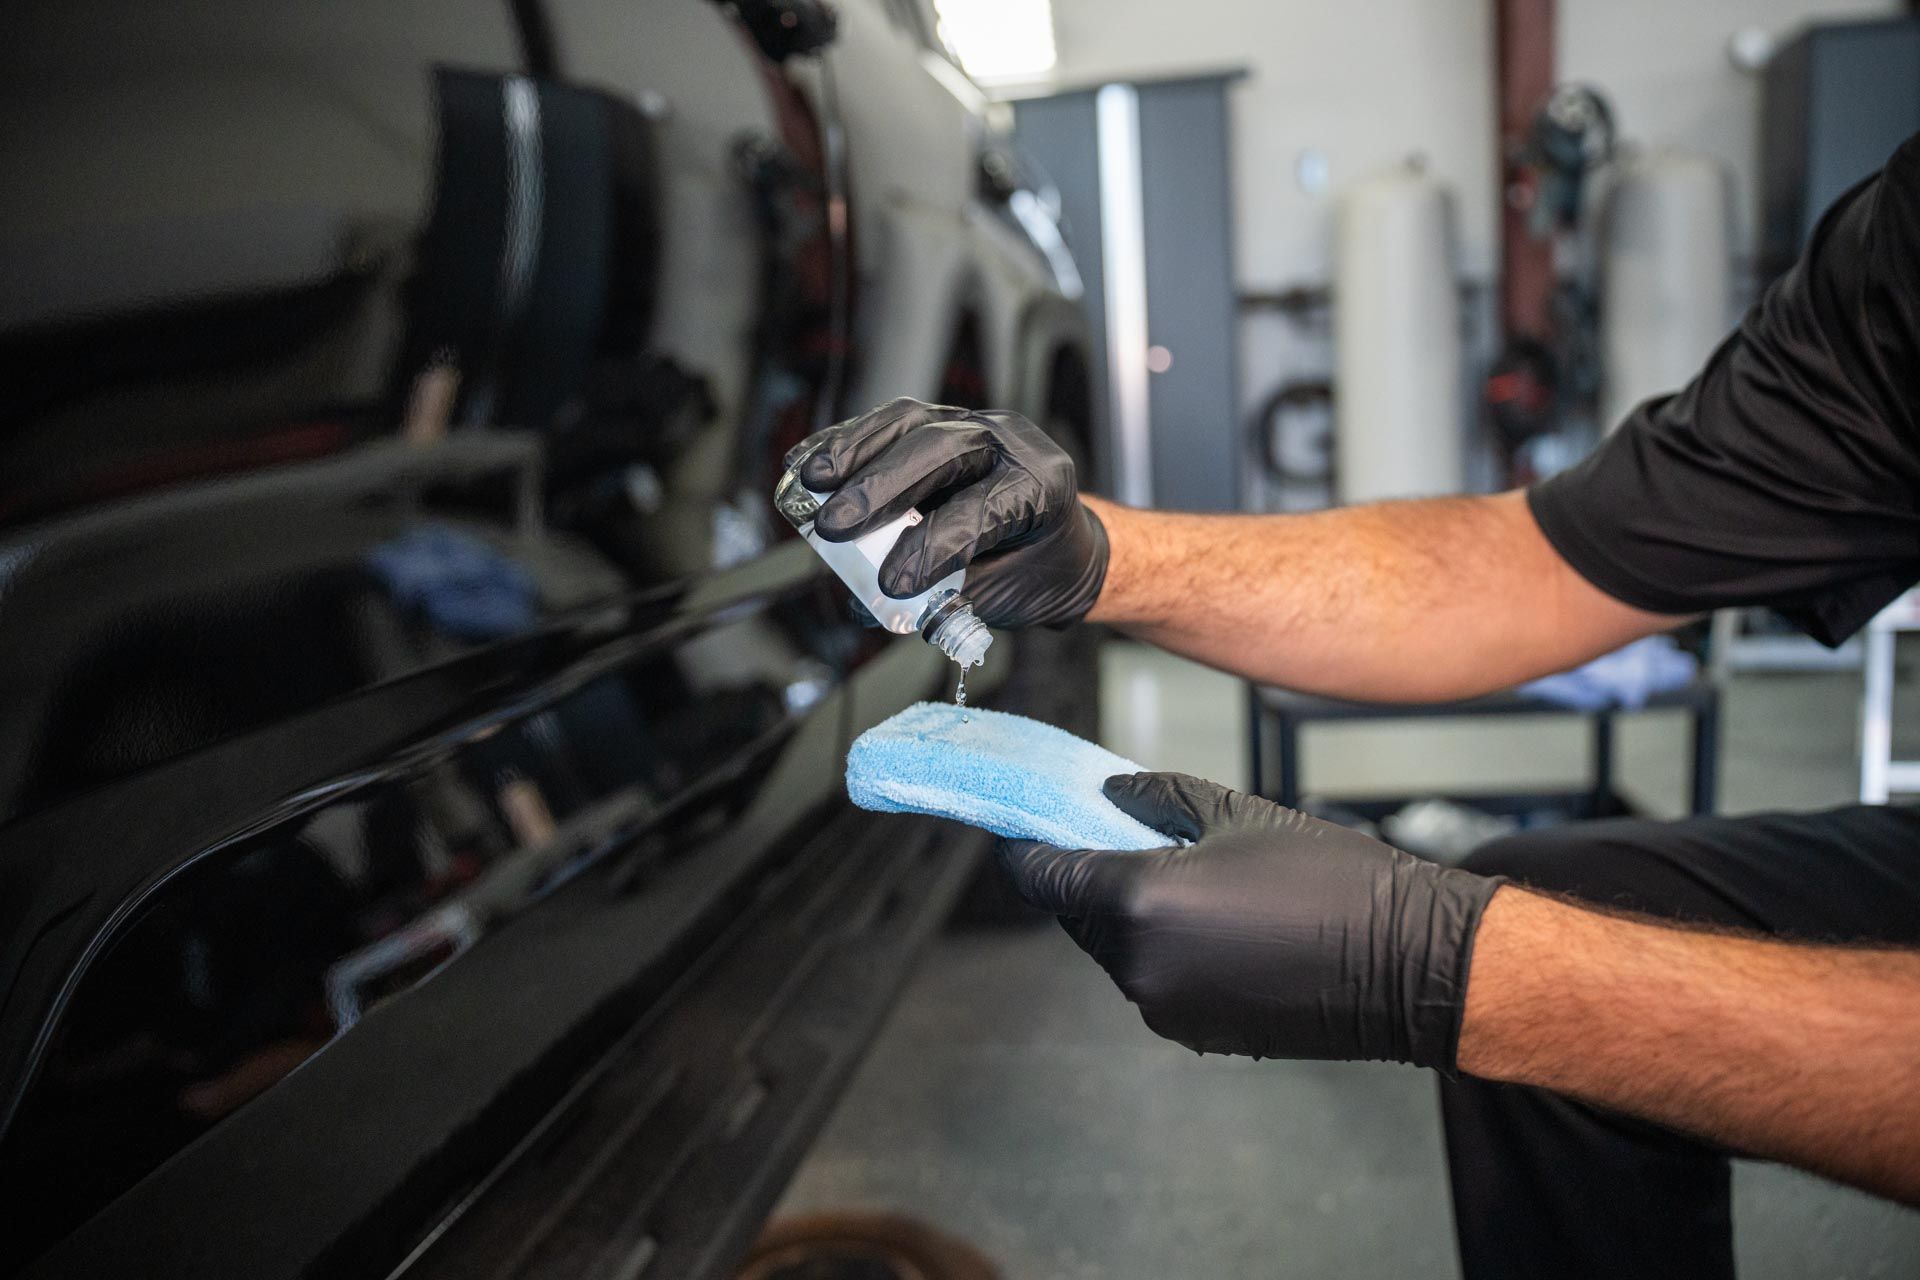 Ceramic Coating - A man wearing black gloves is applying a liquid to a blue sponge